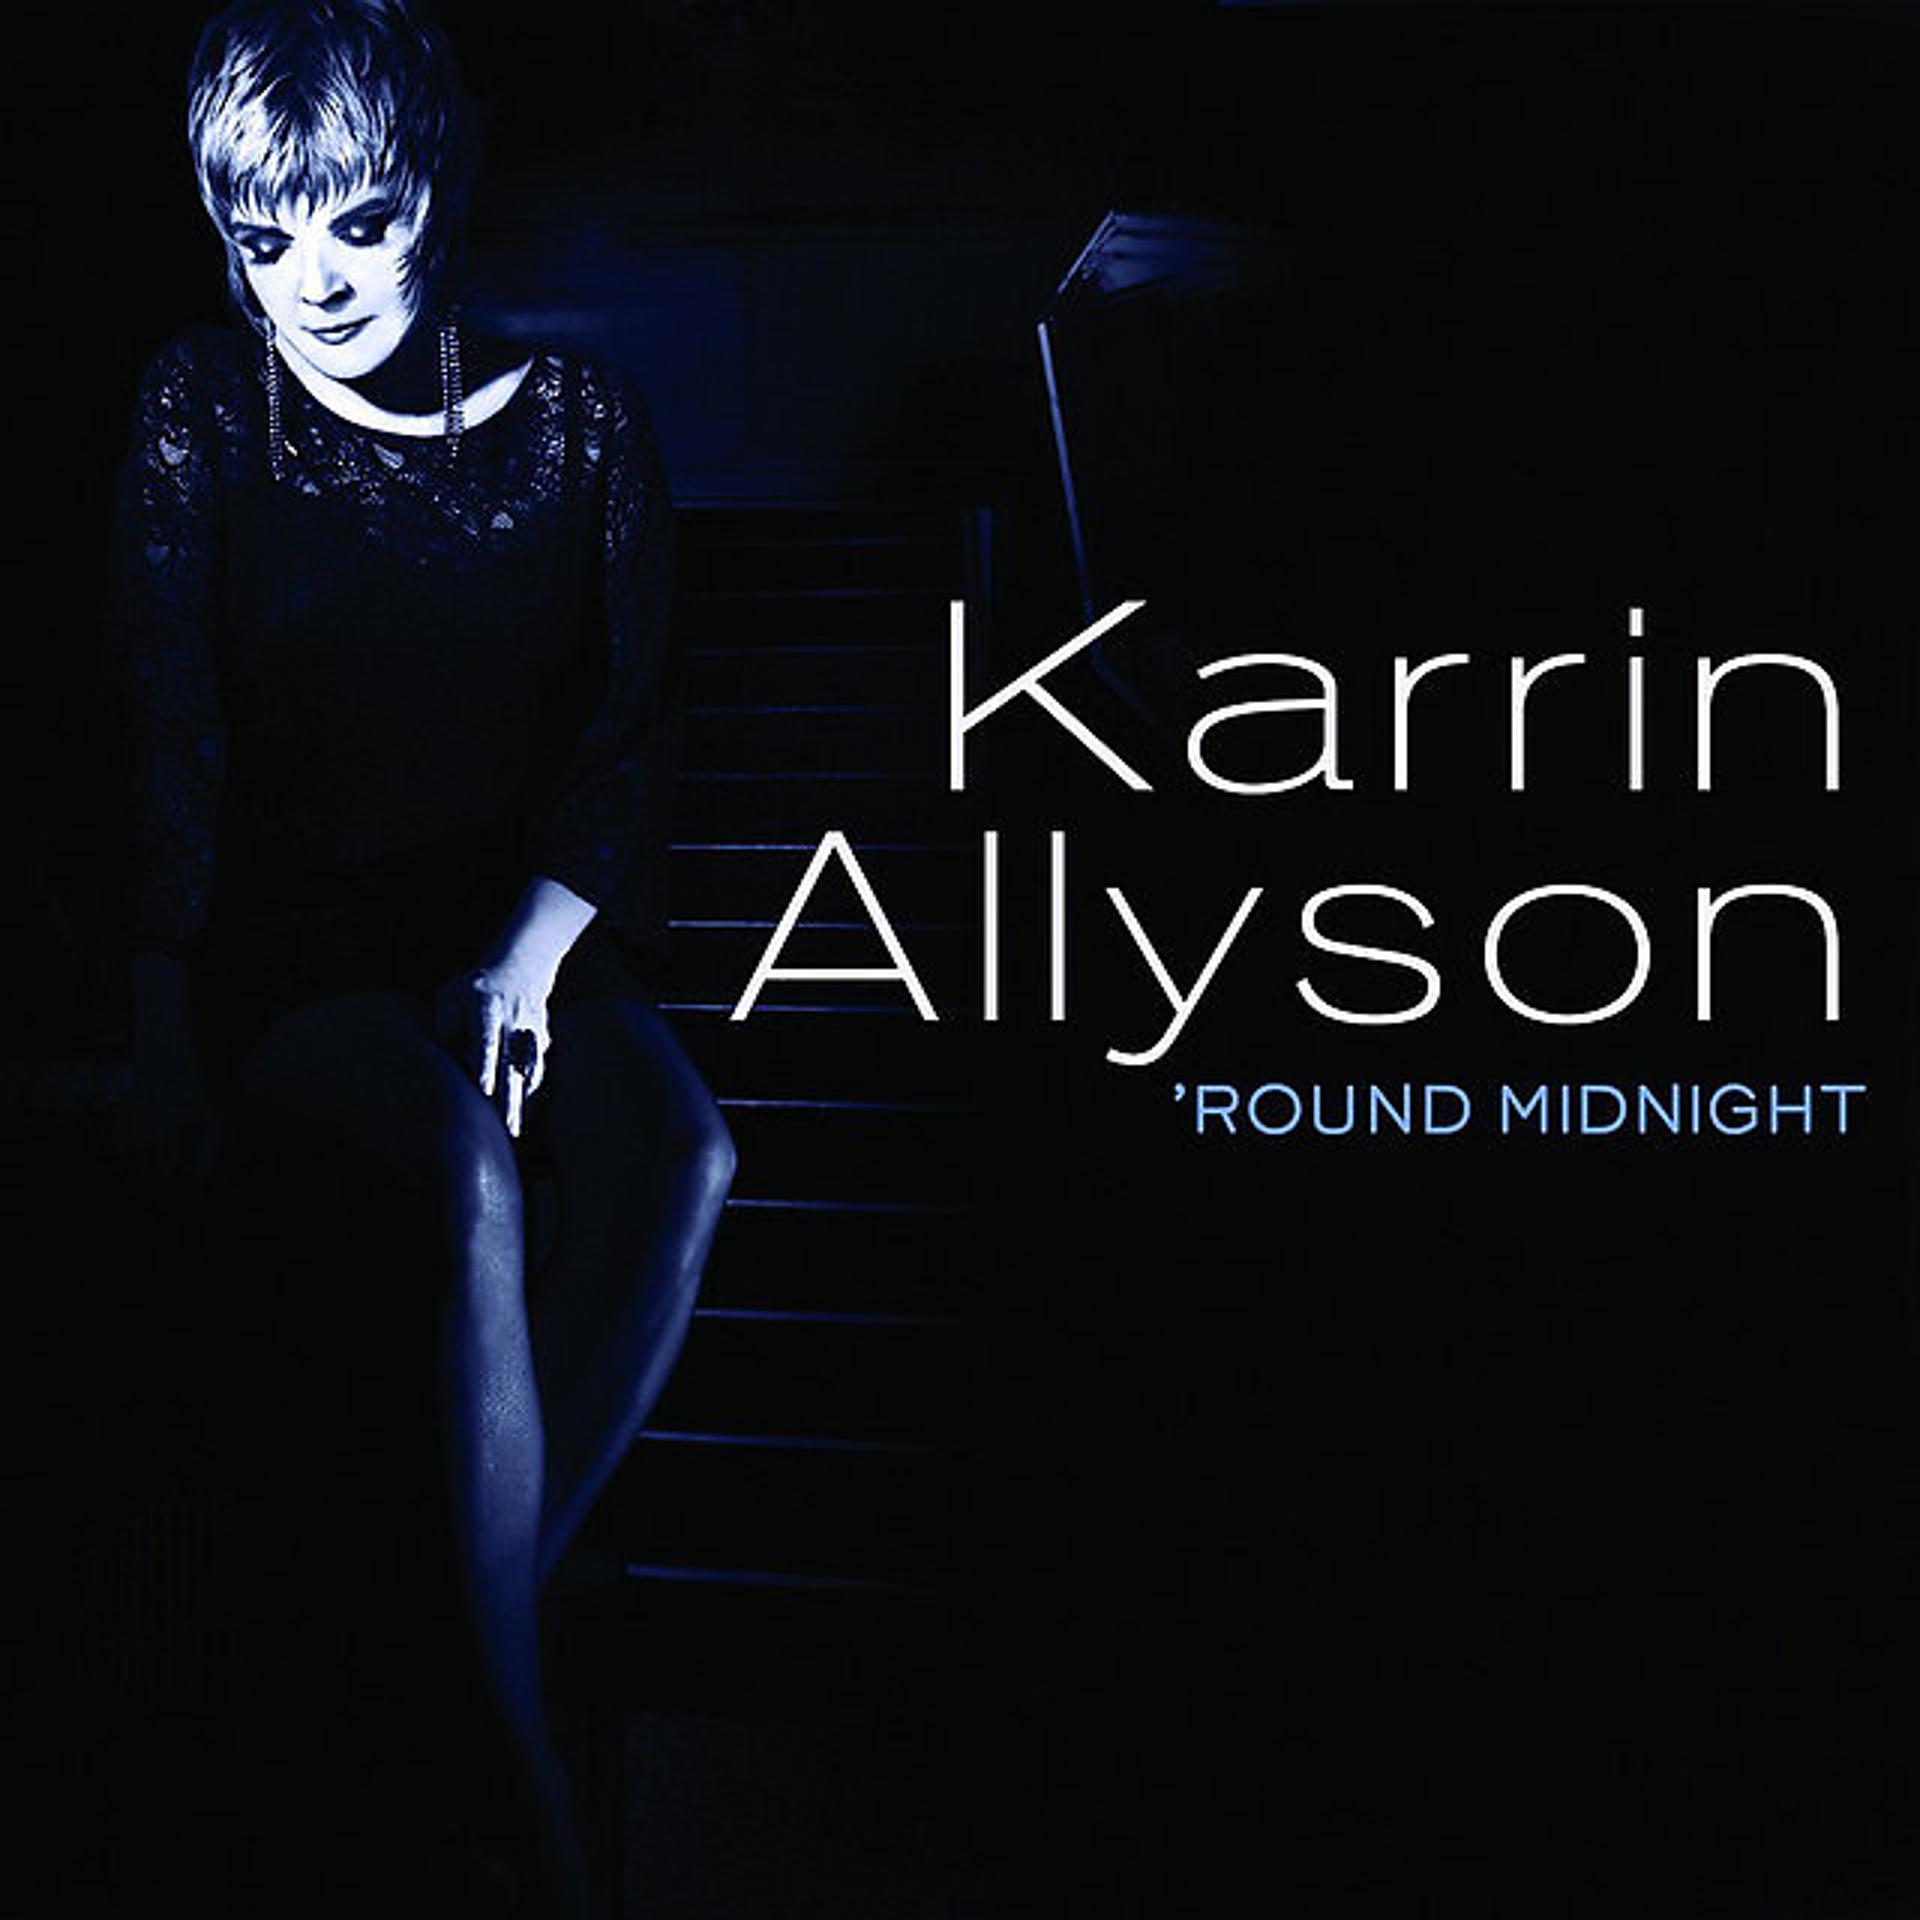 Round midnight. Karrin Allyson. Midnight Avenue. Каррин Элисон певица.